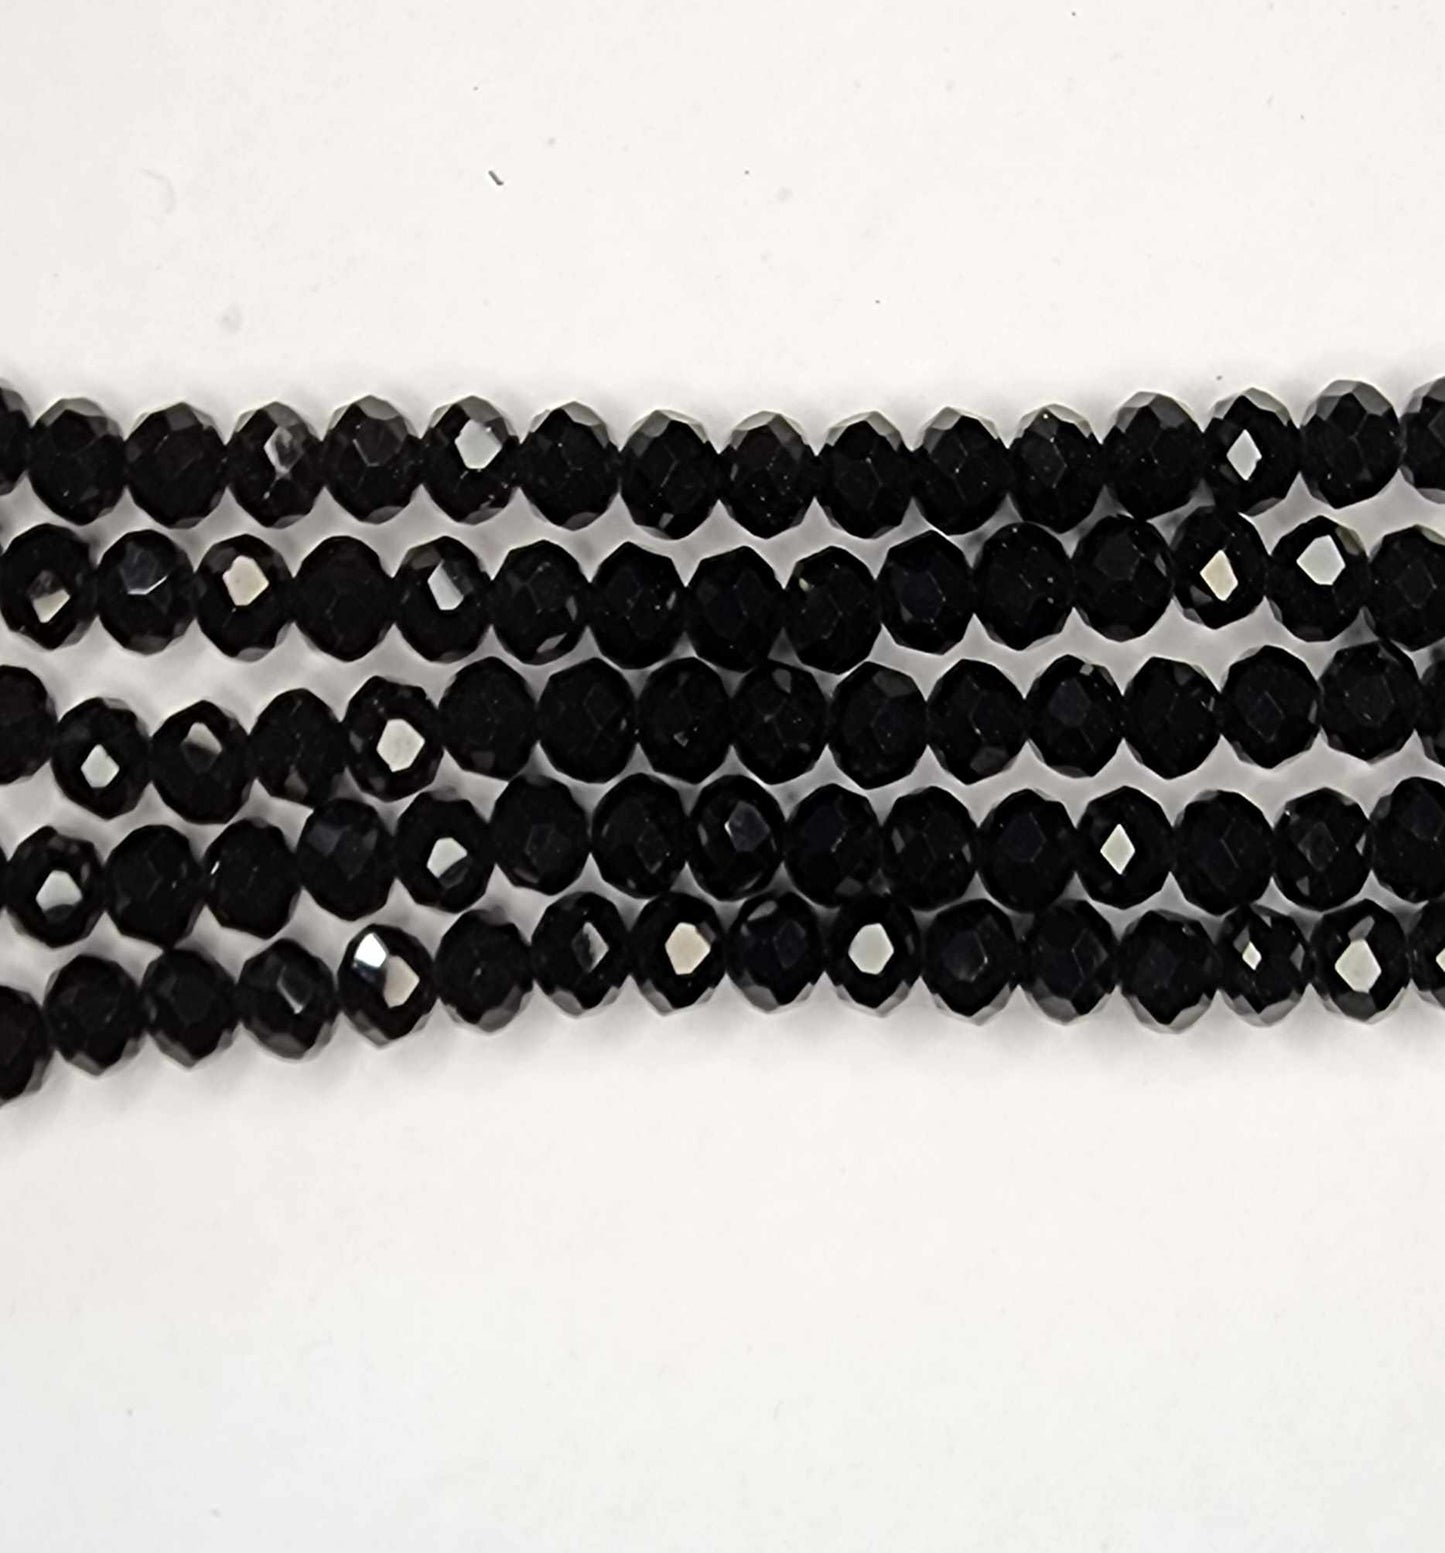 Black Strand of beads